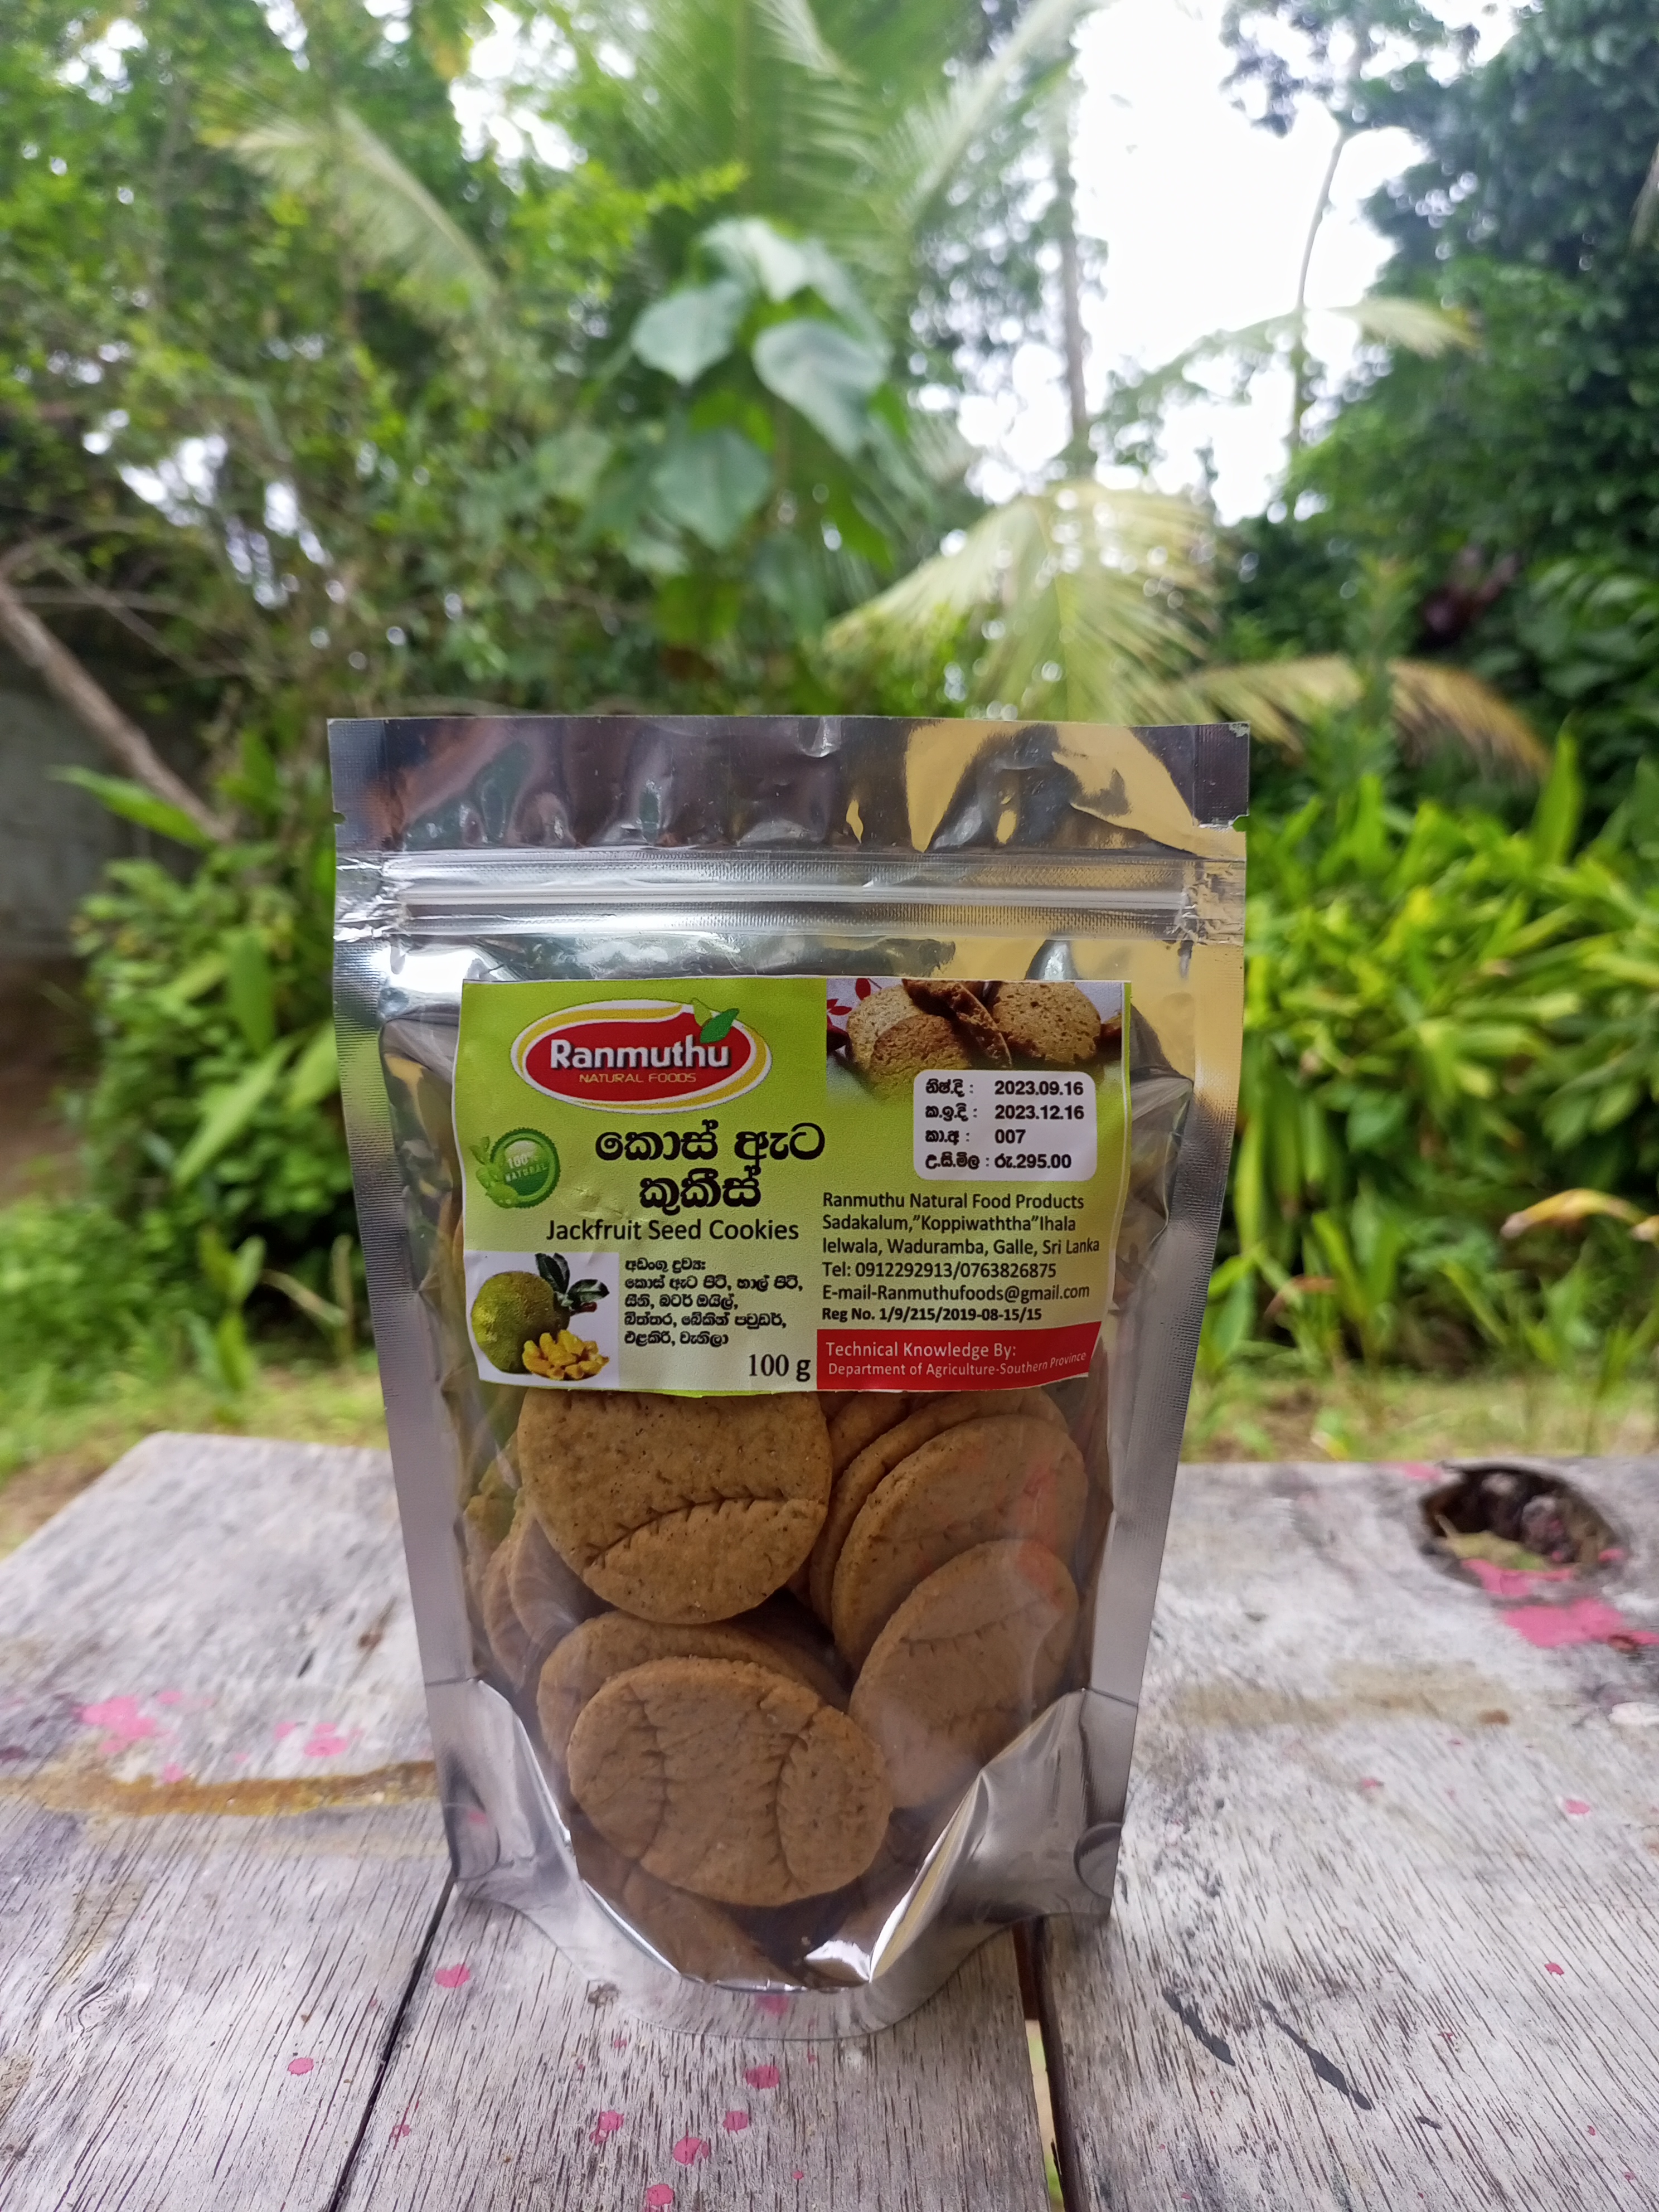 Ranmuthu Jackfruit Seeds Cookies